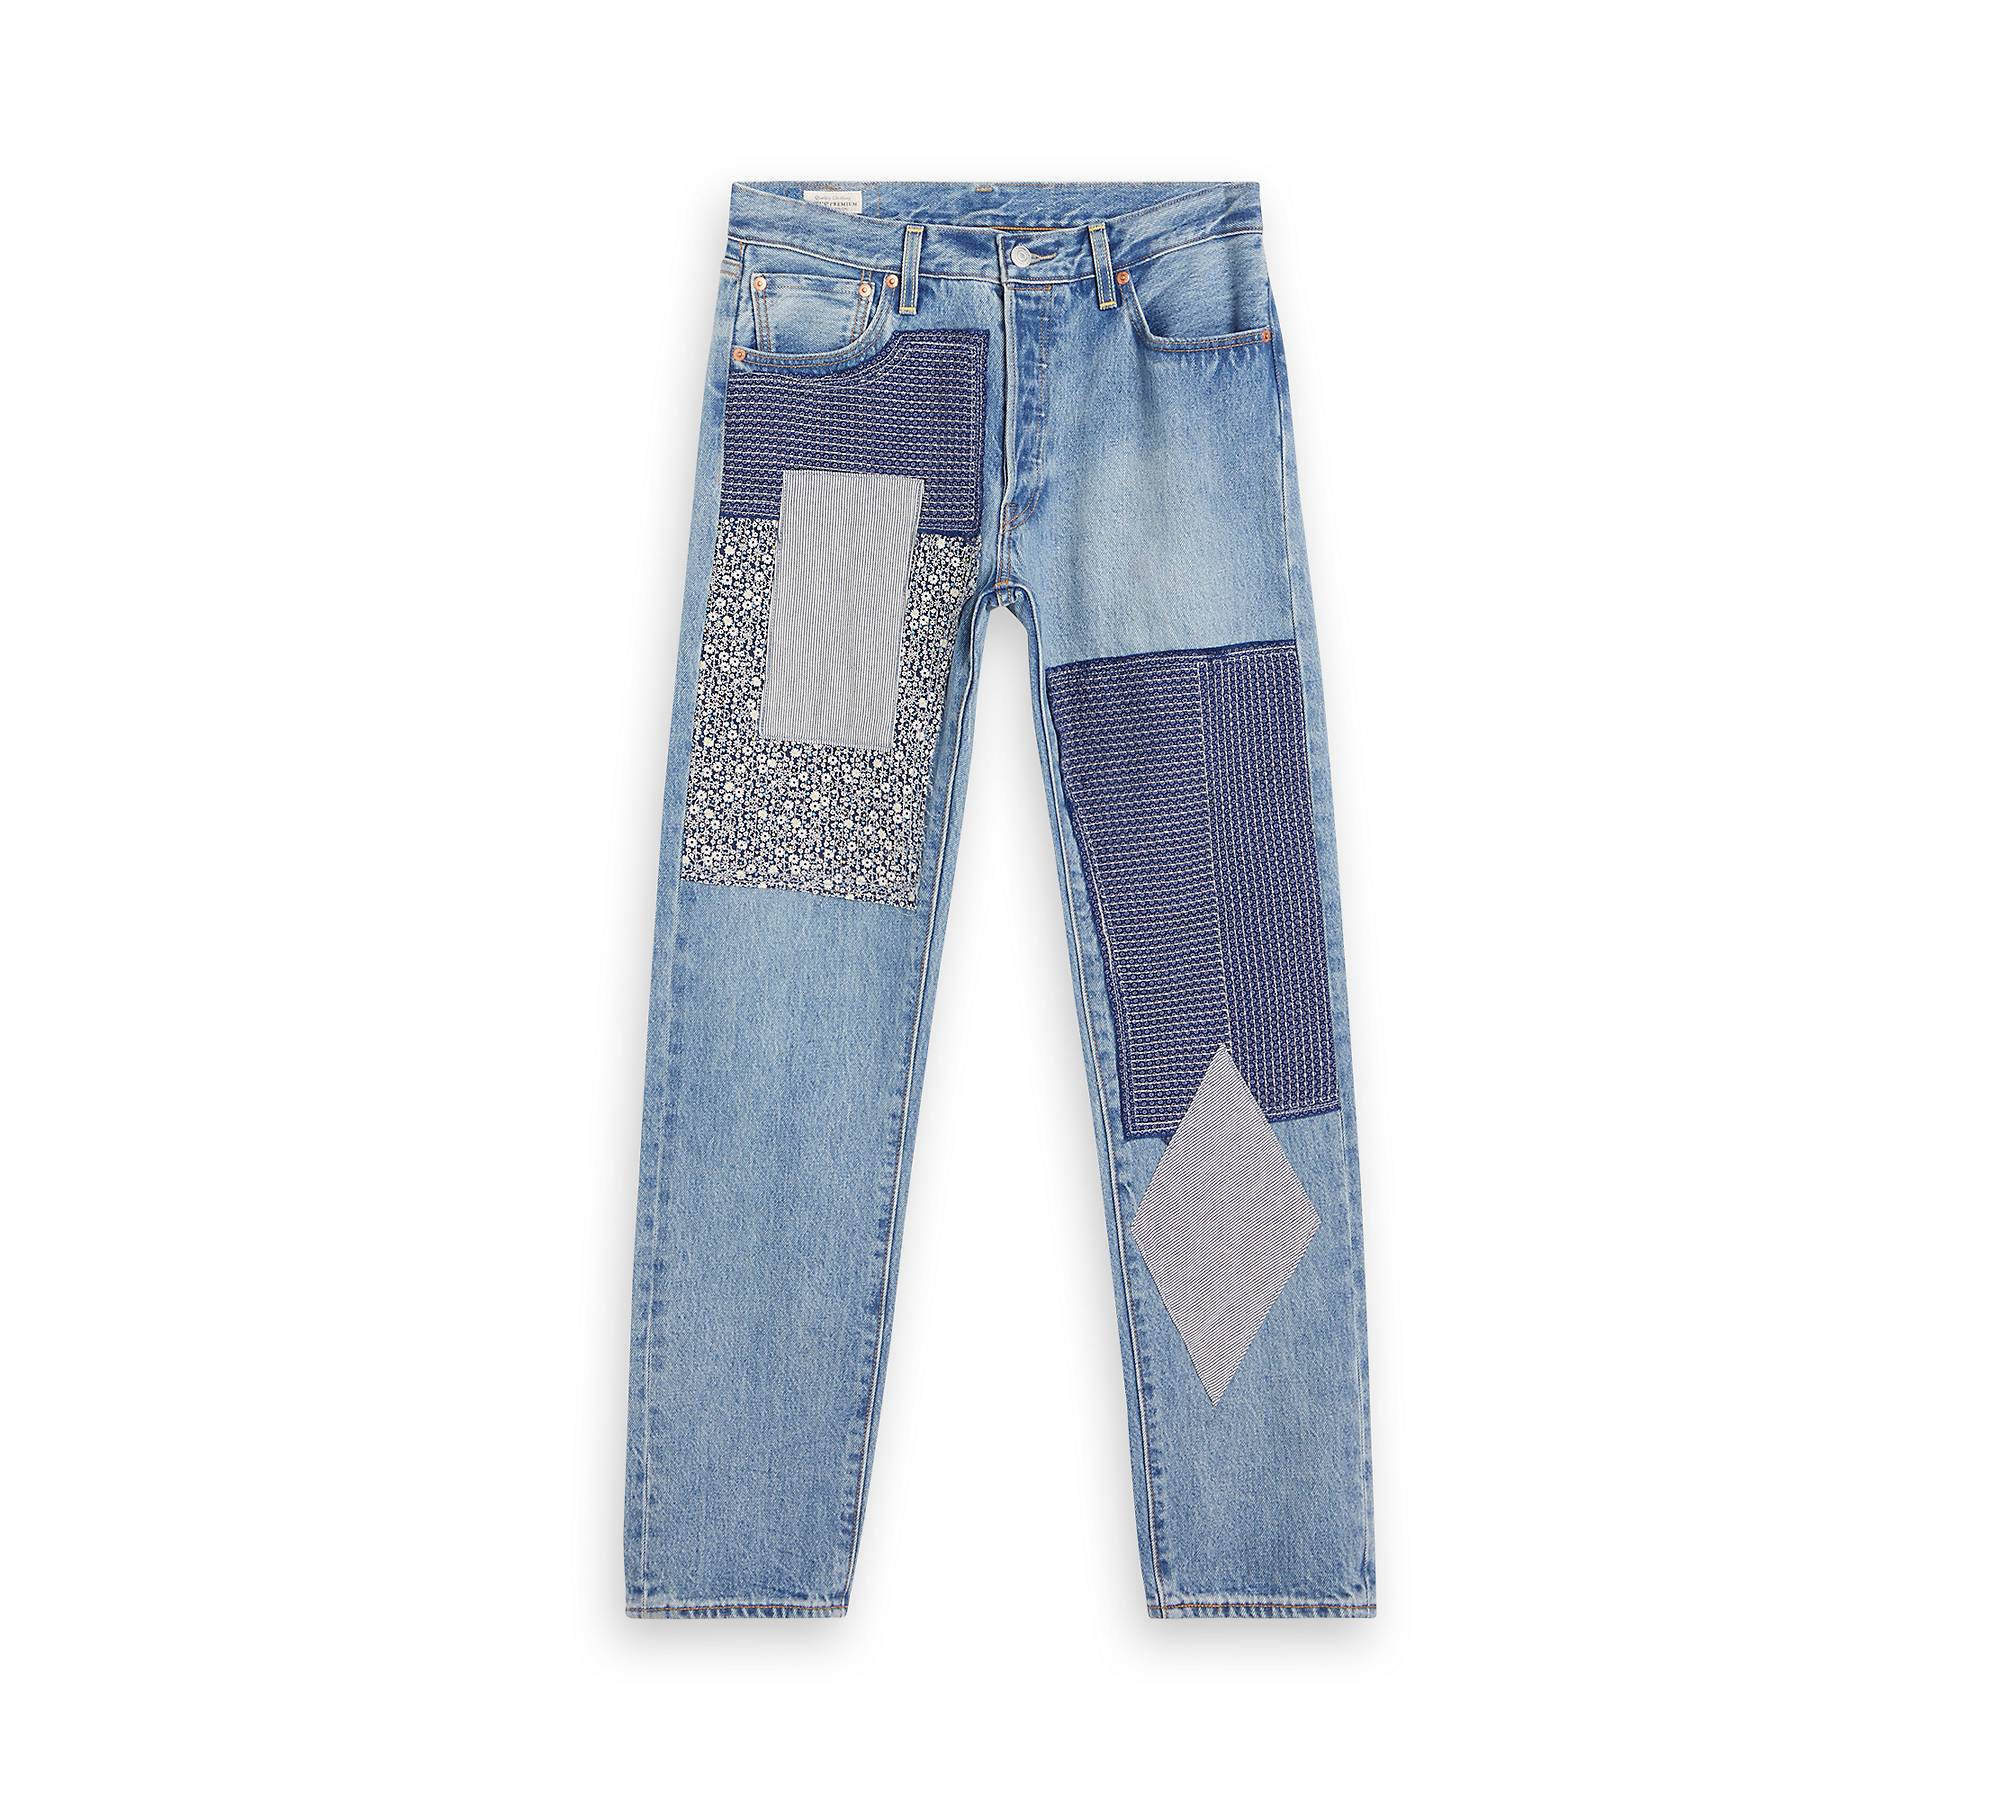 Levi's 501 '54 Original Fit Jean - Size 36/32